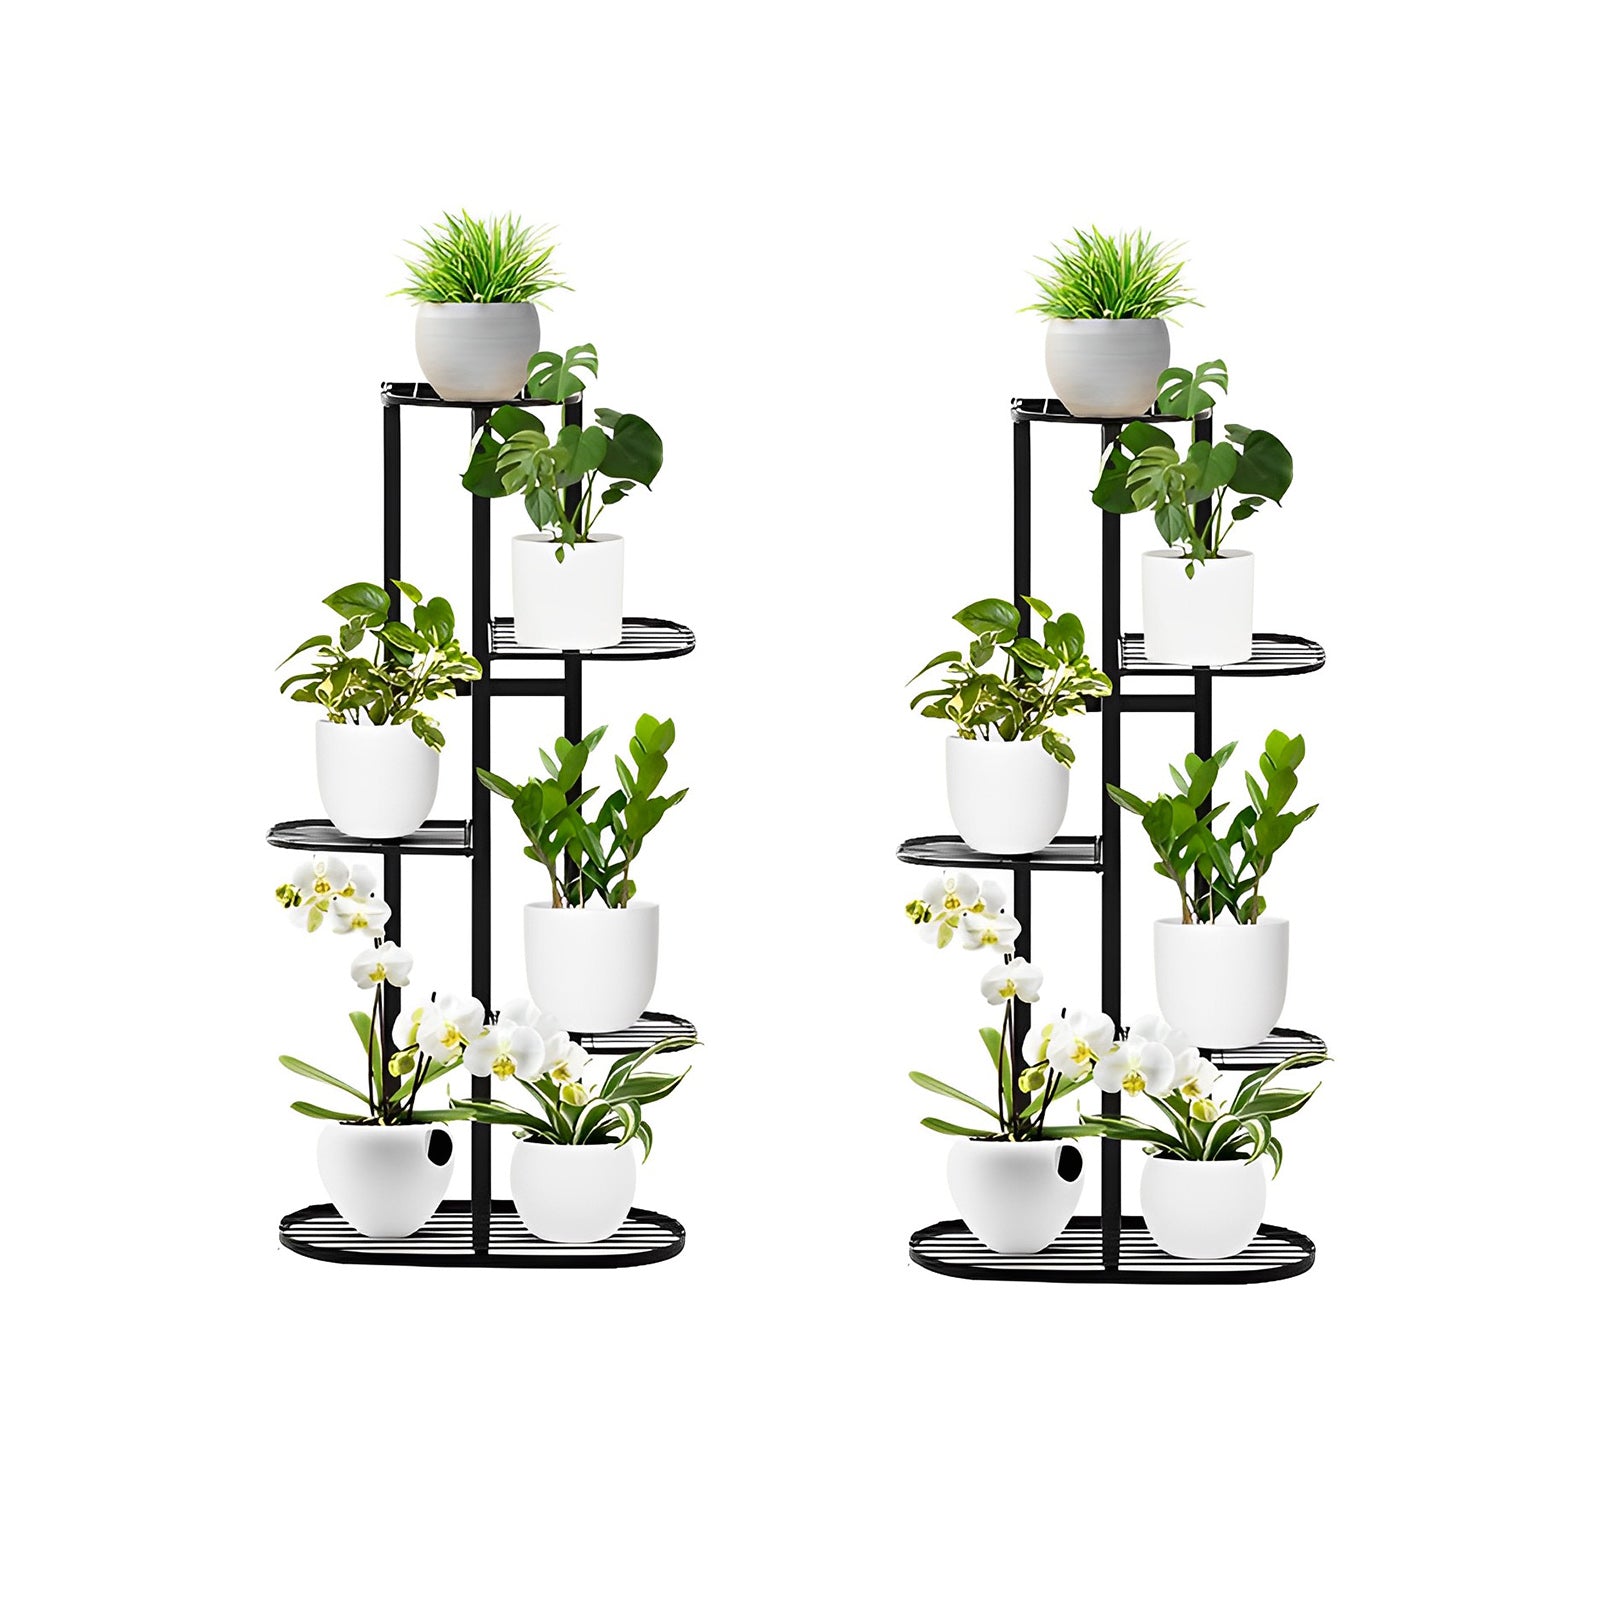 SOGA 2X 5 Tier 6 Pots Black Metal Plant Rack Flowerpot Storage Display Stand Holder Home Garden Decor